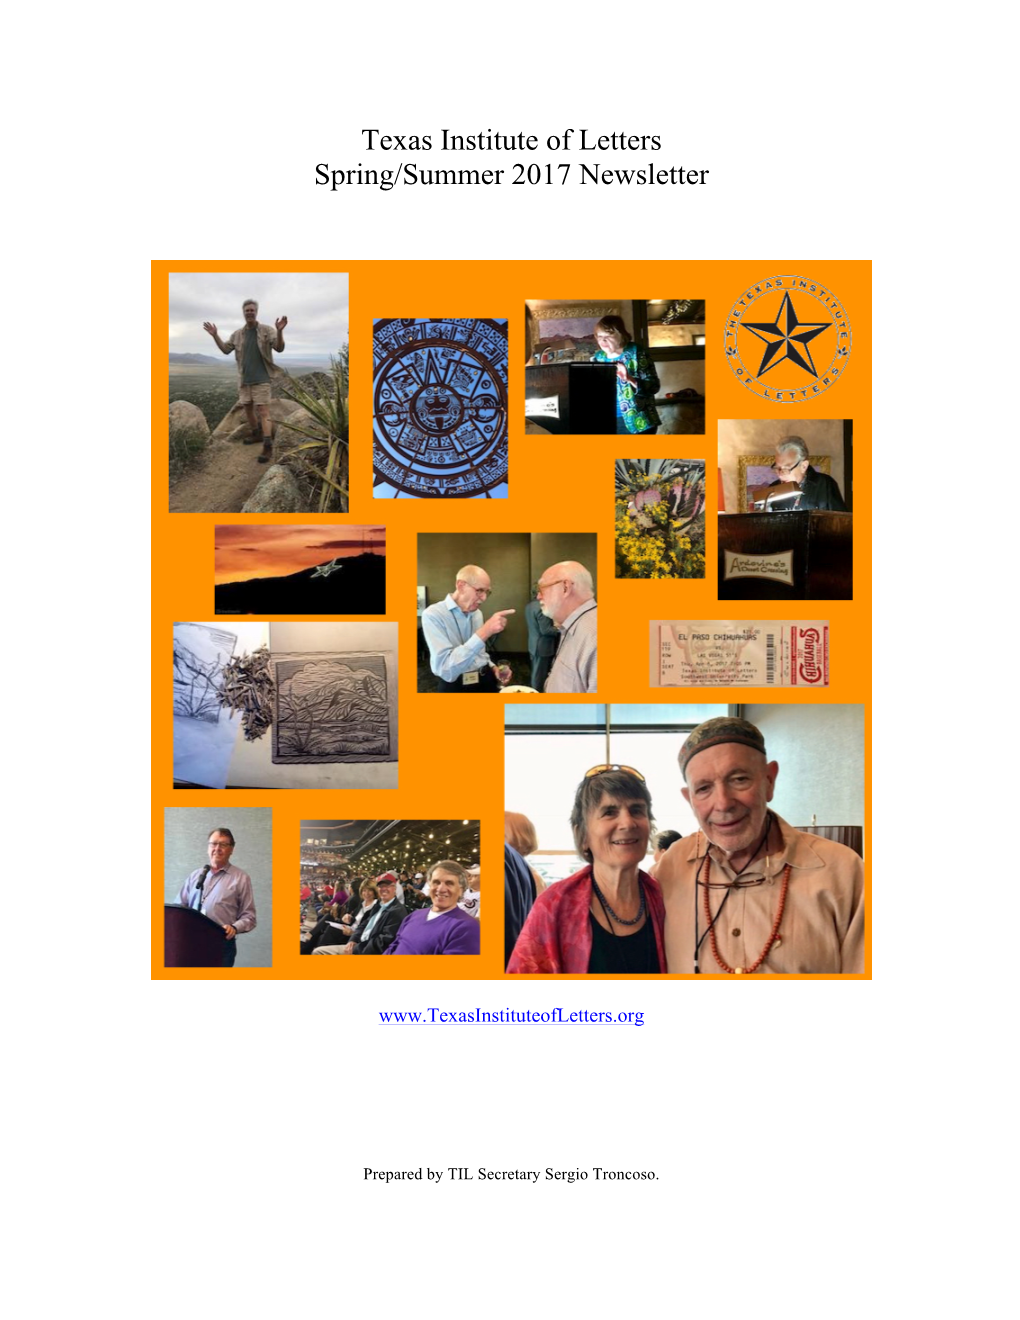 Texas Institute of Letters Spring/Summer 2017 Newsletter